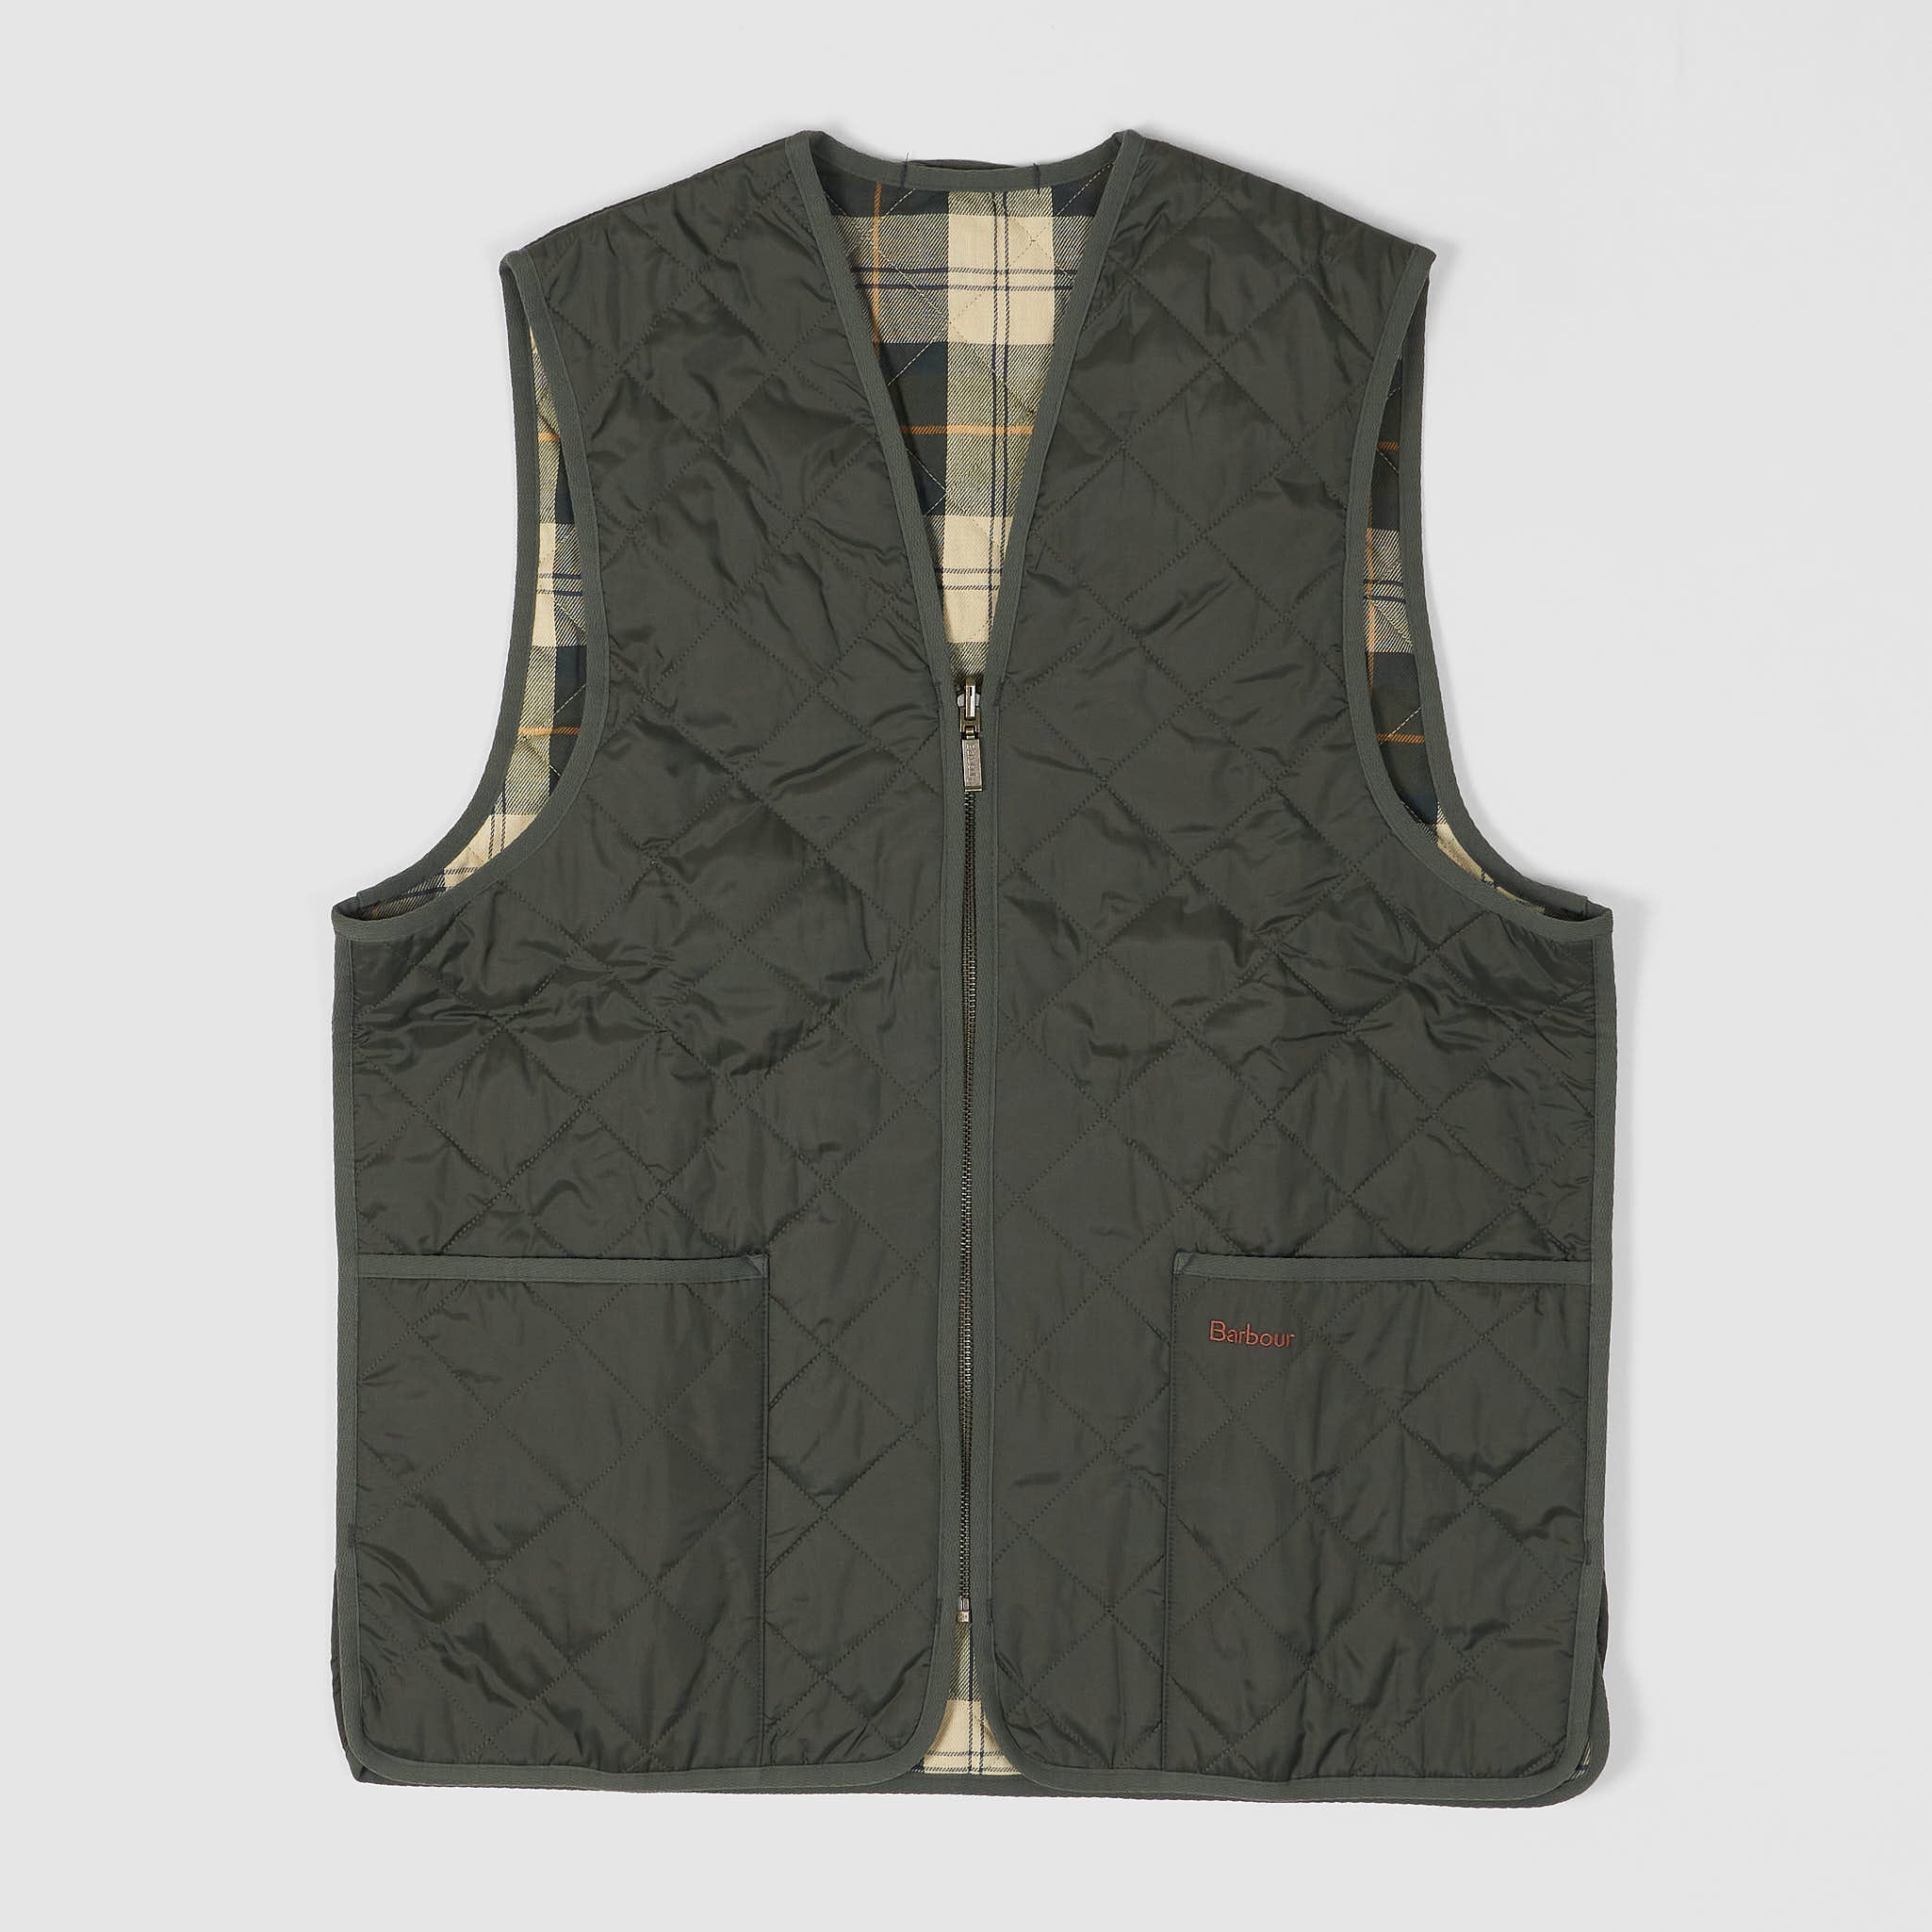 Barbour Beaufort with liner vest size 38